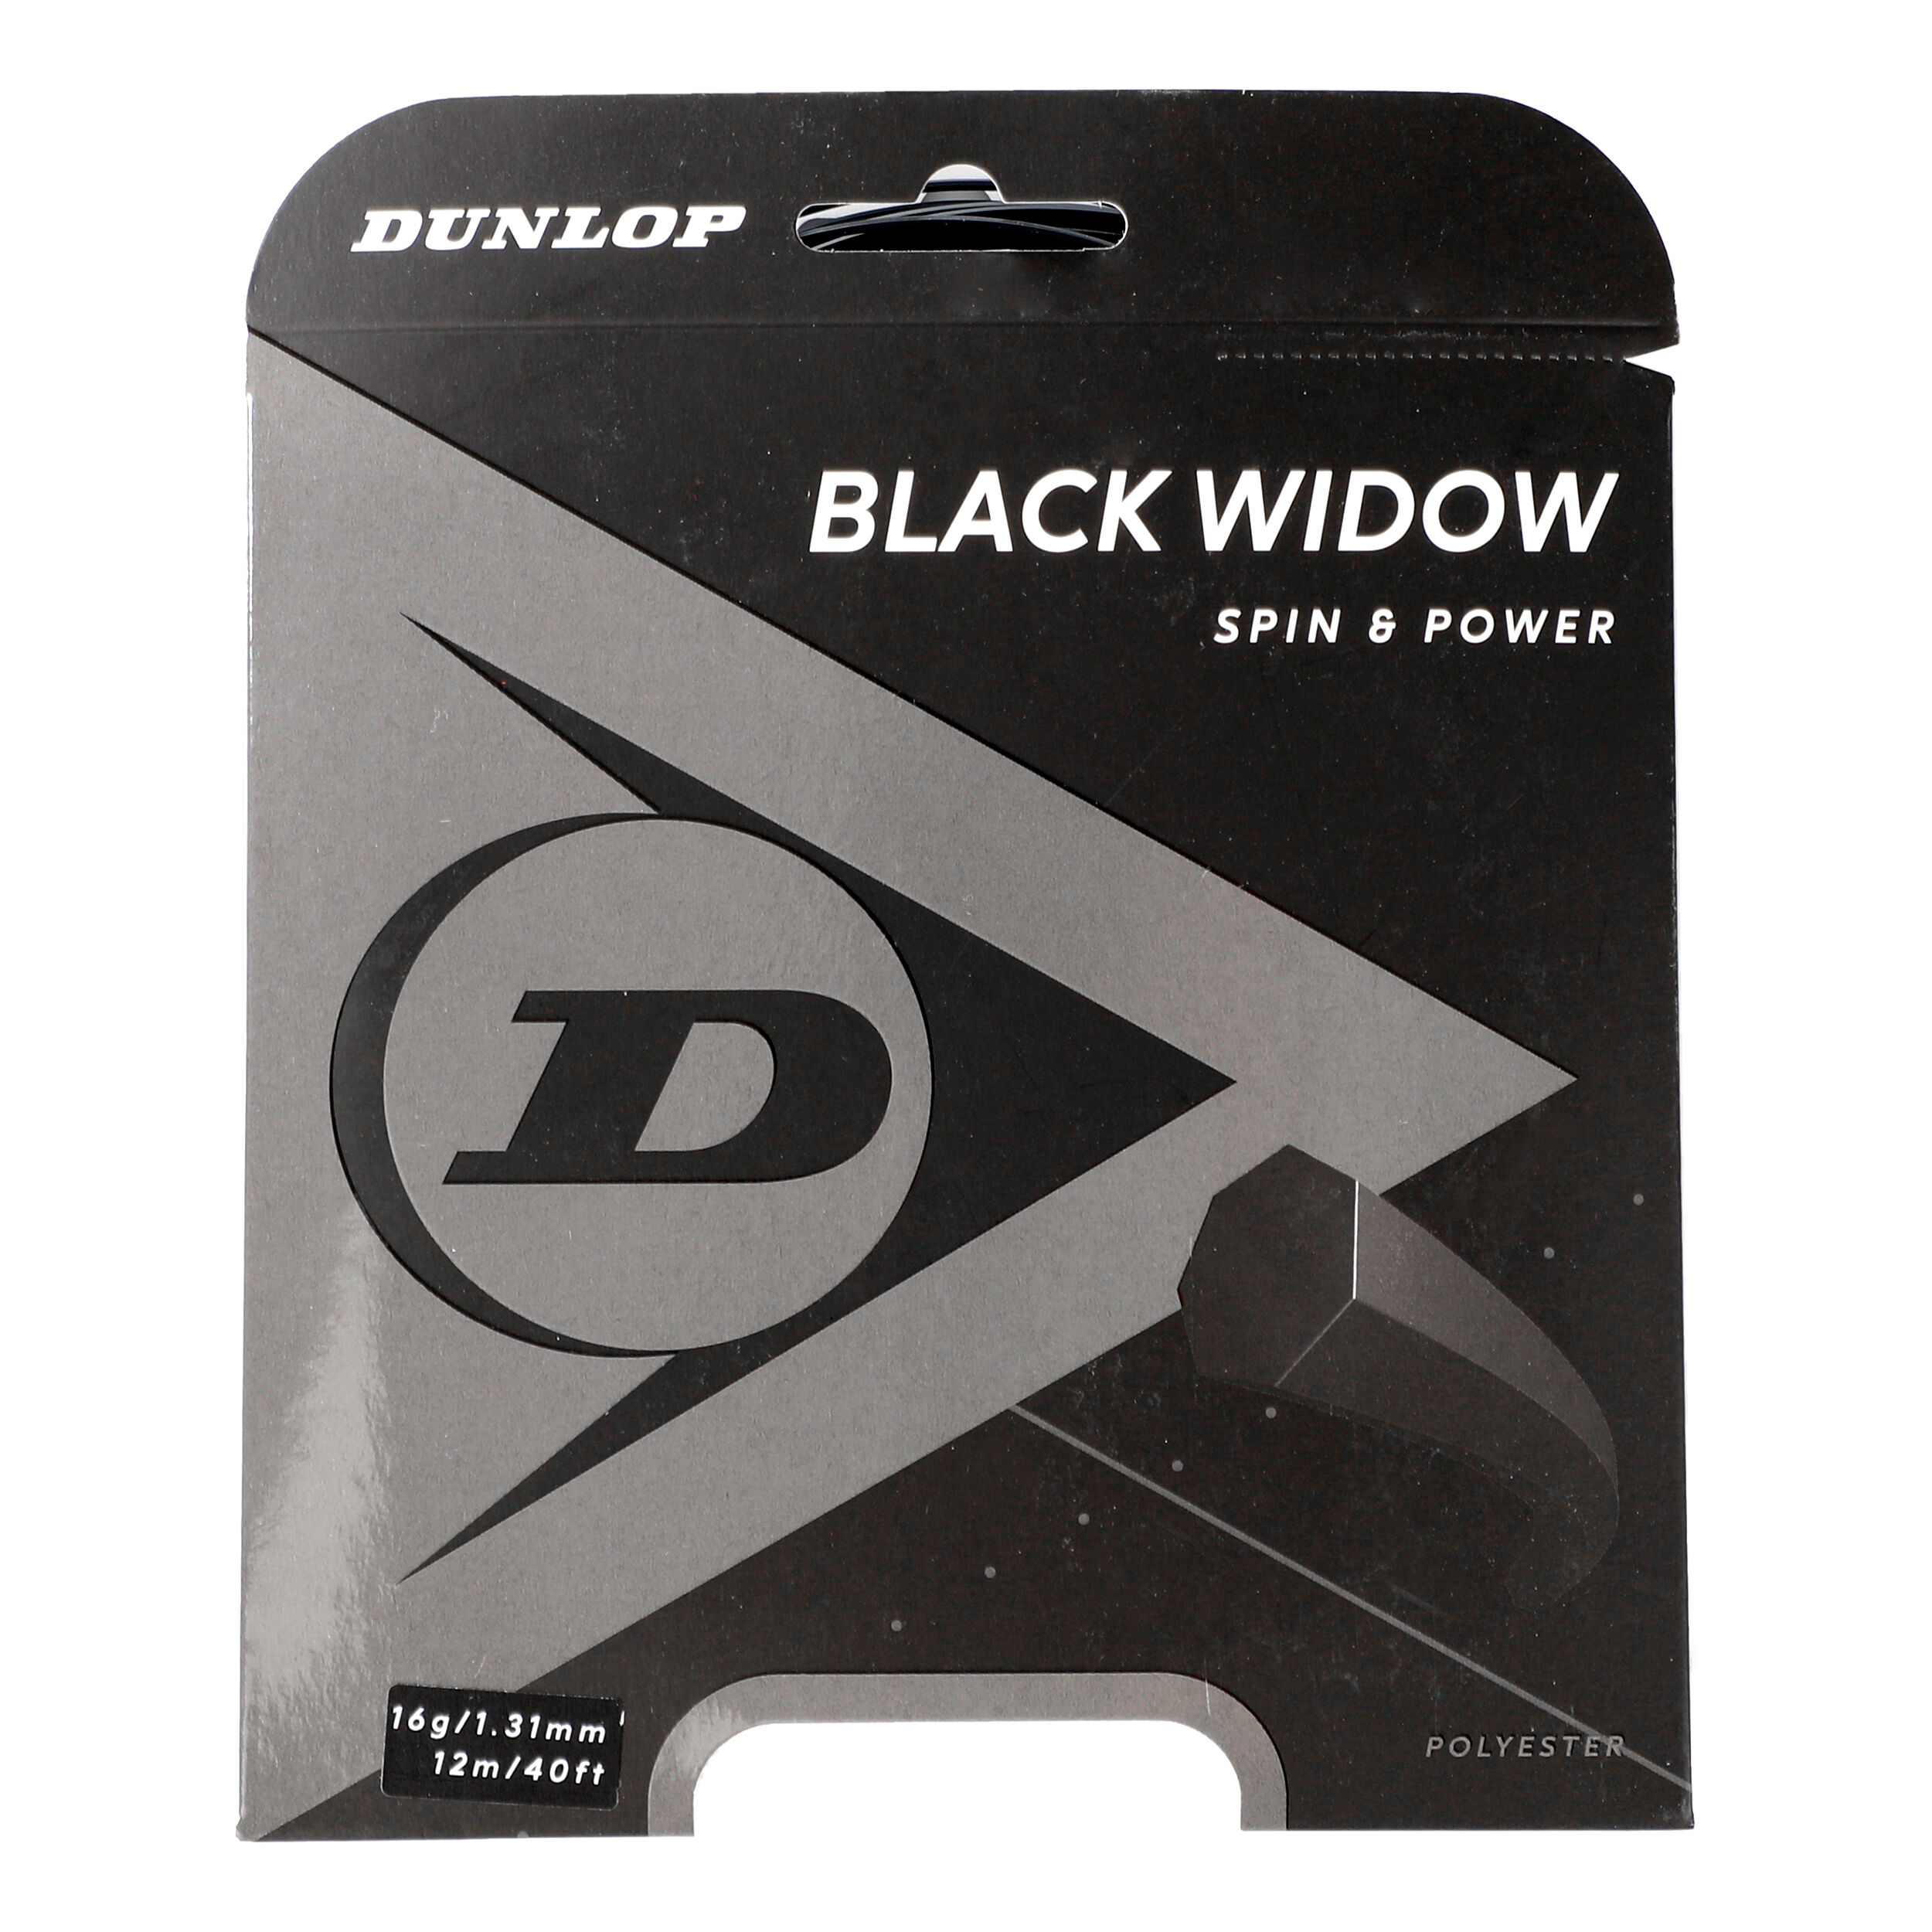 Dunlop Black Widow 12 M String Rackets Black Black.16g 1.31mm.free uk delivery. 